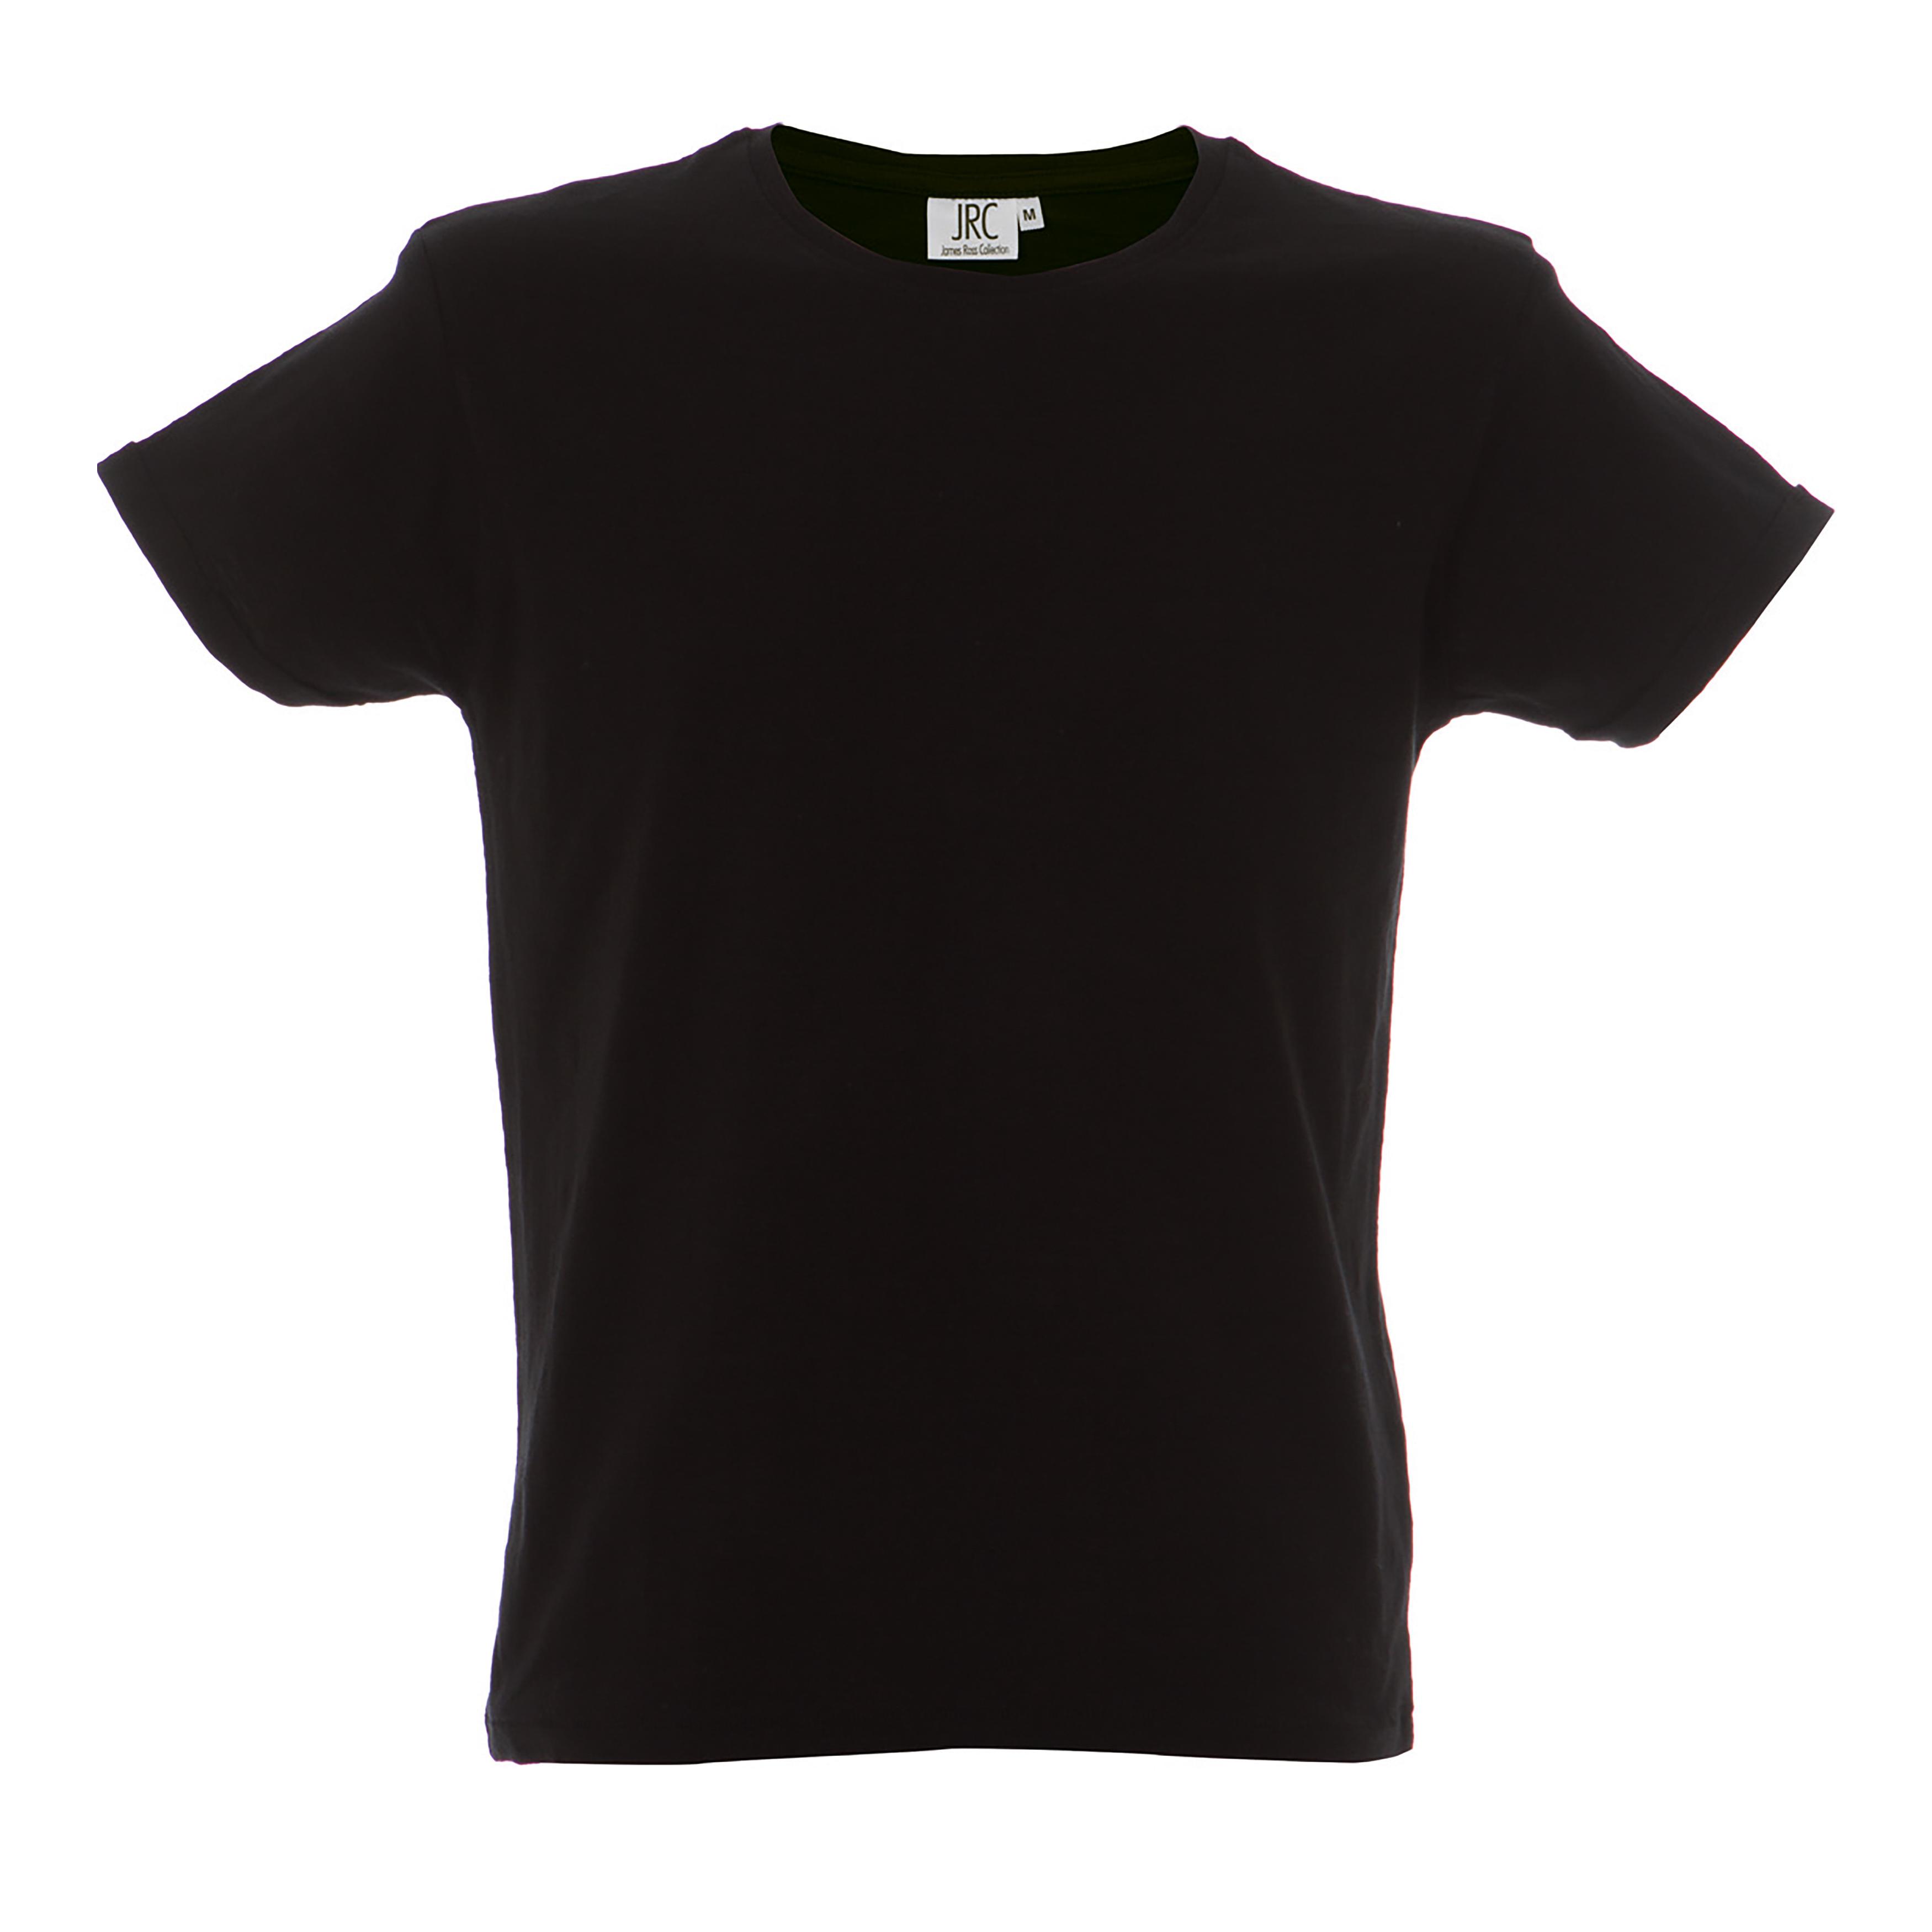 T-Shirt Perth Man James Ross 99004, qualit e versatilit